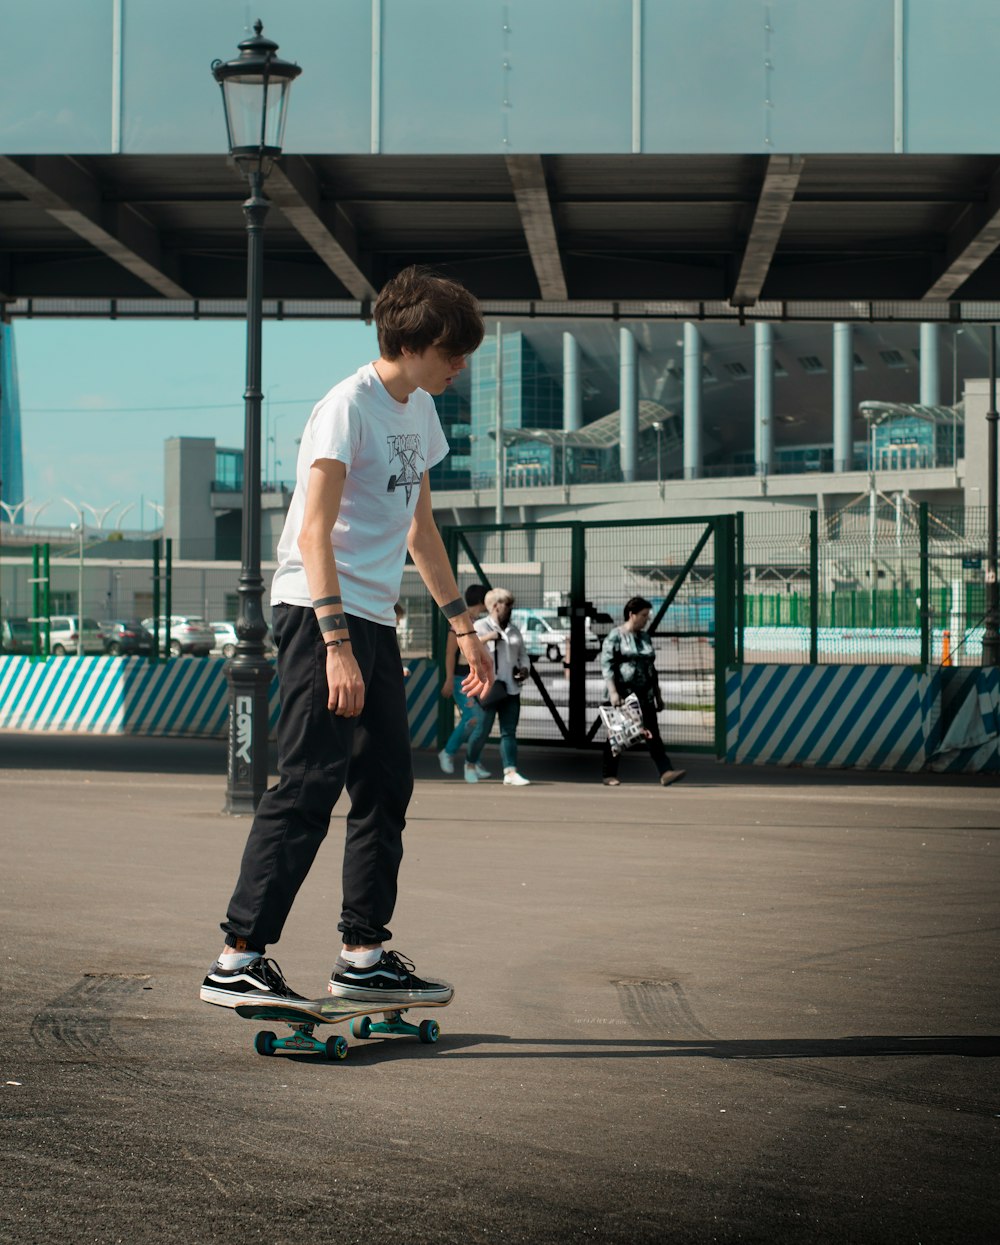 man riding on black skateboard beside gray building